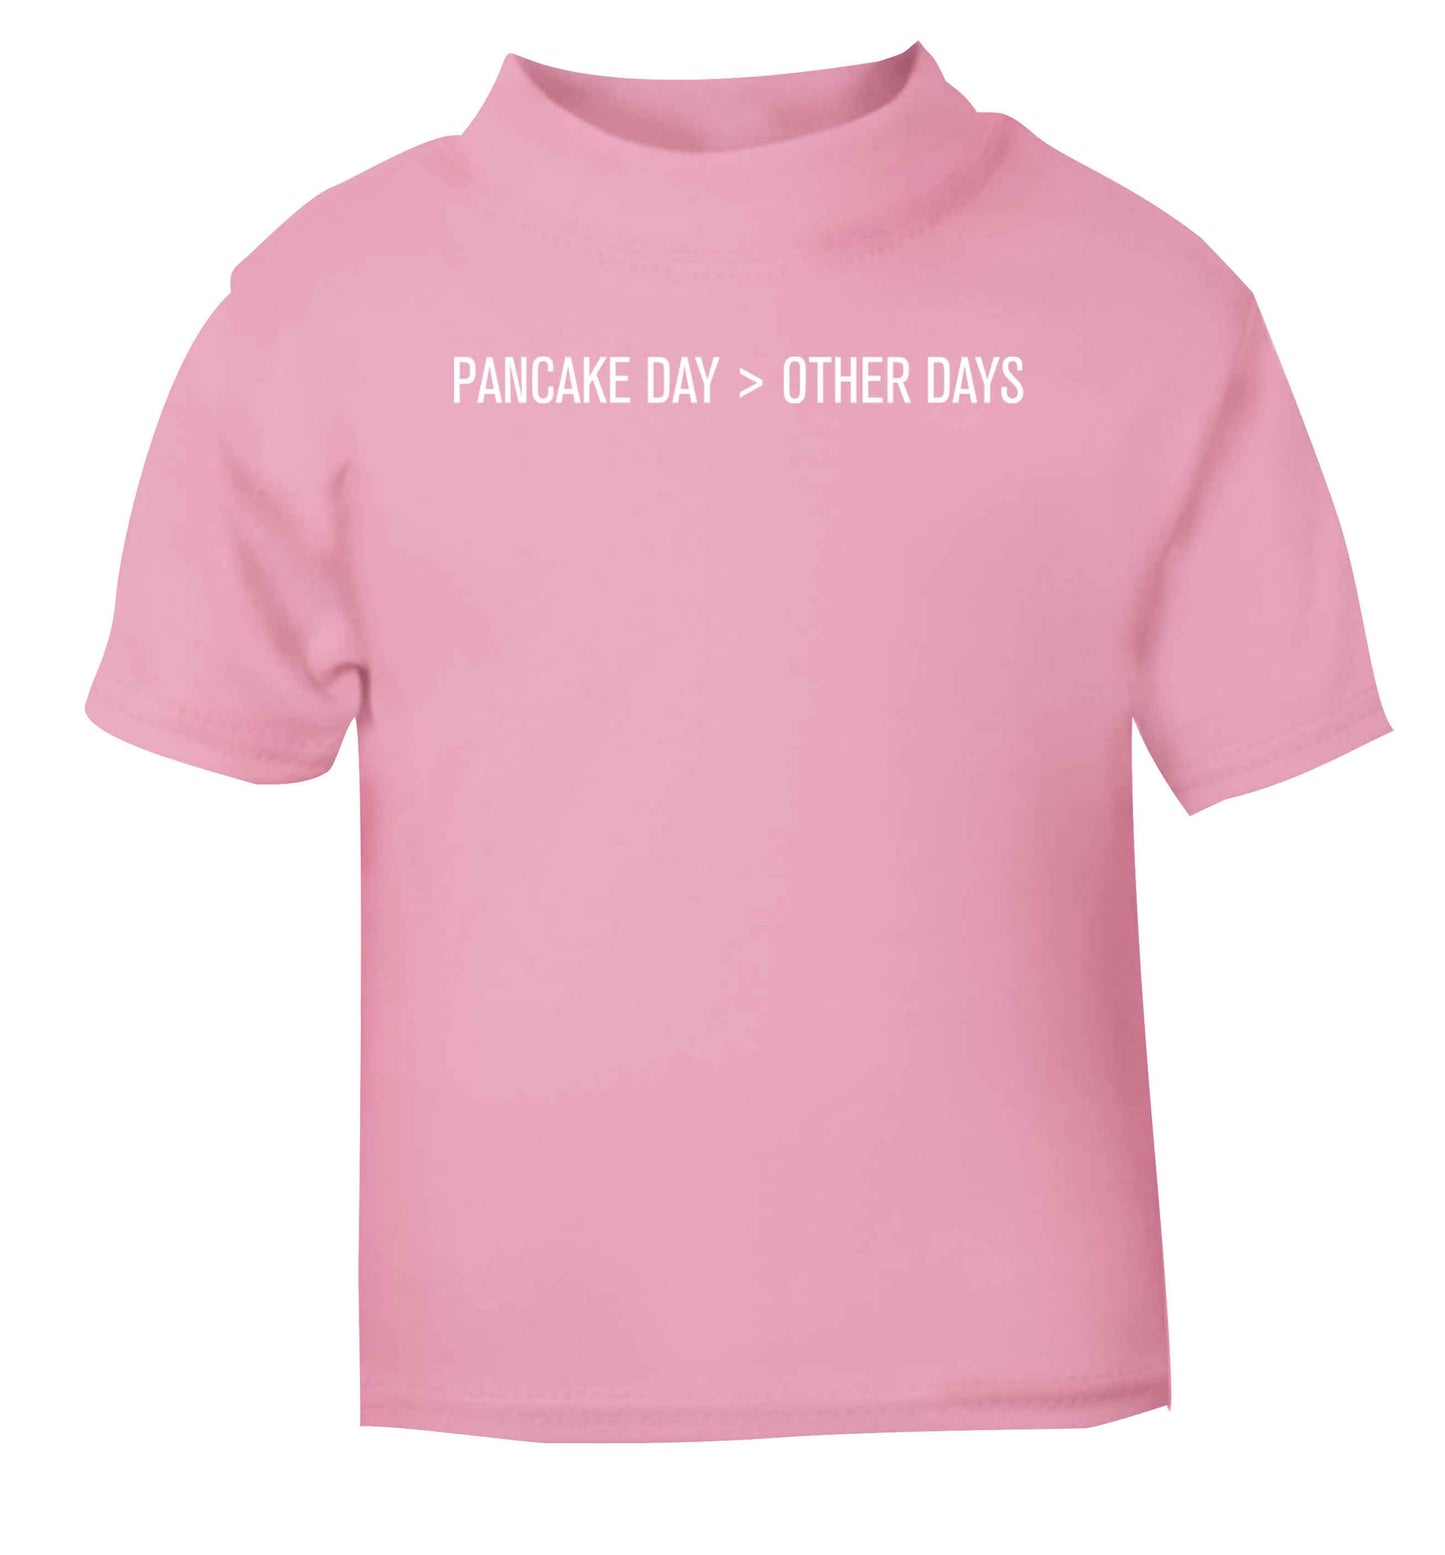 Pancake day > other days light pink baby toddler Tshirt 2 Years